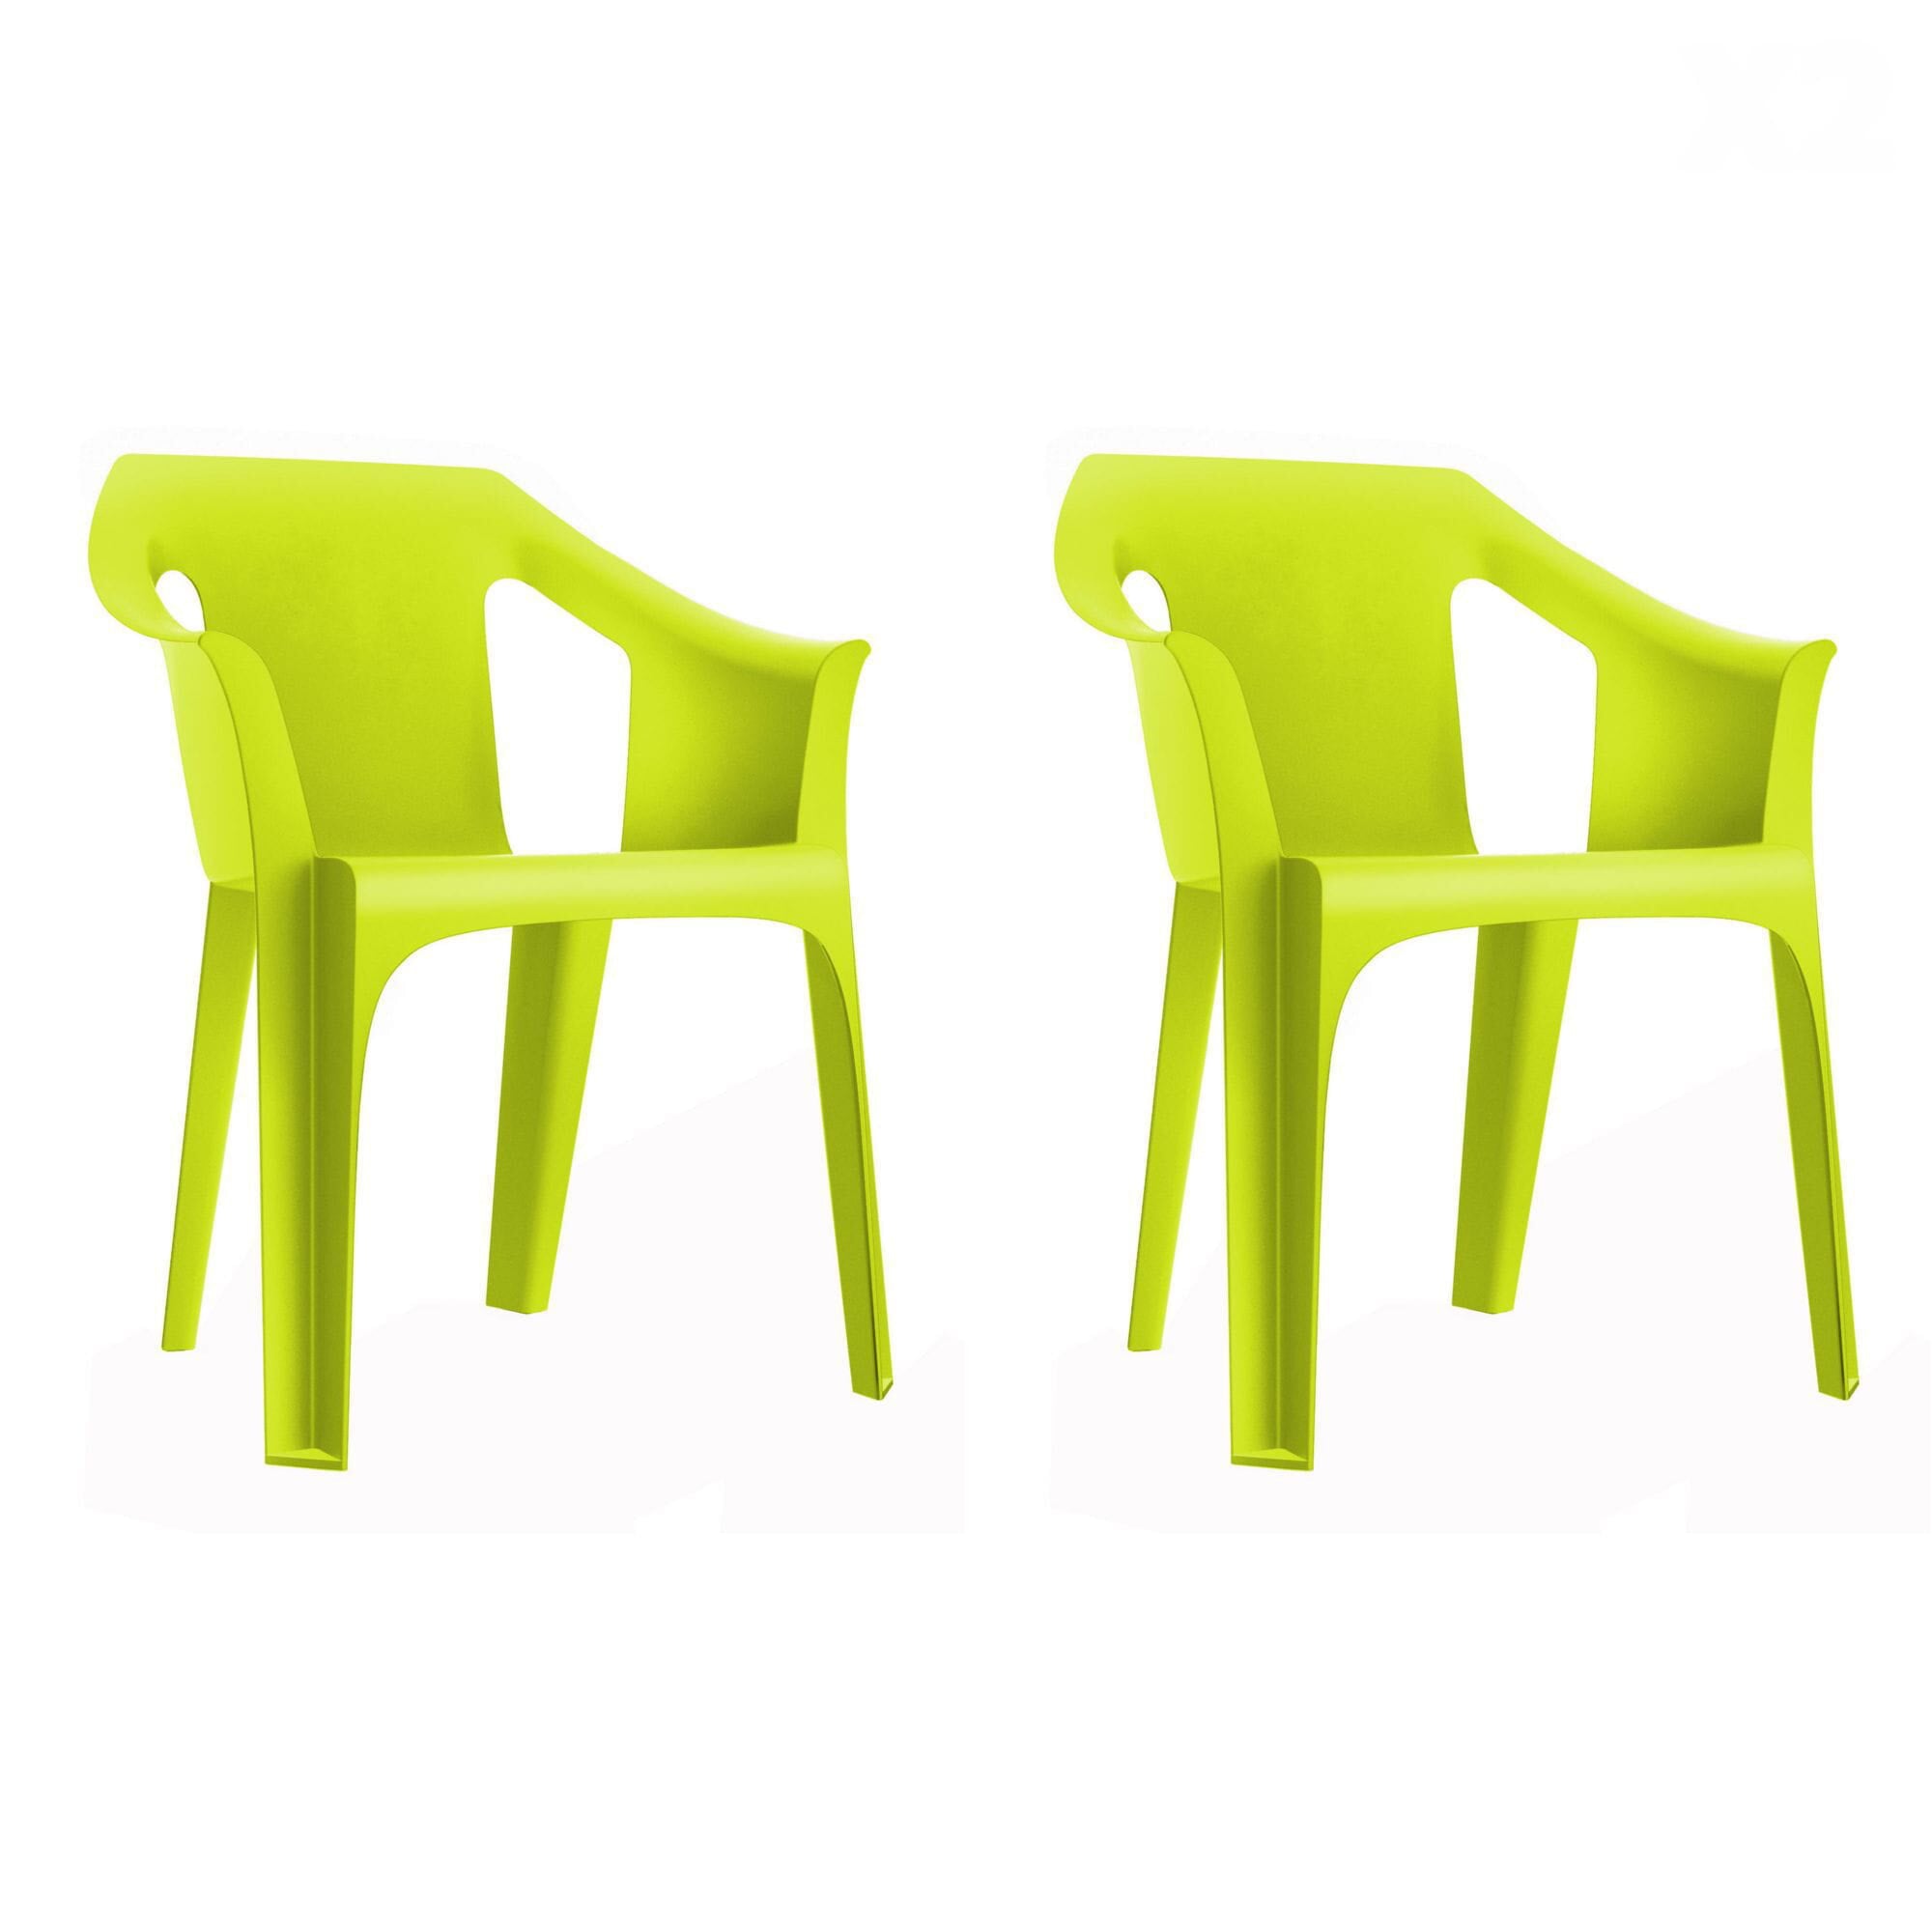 Garbar cool stoel buitenset 2 groen lime